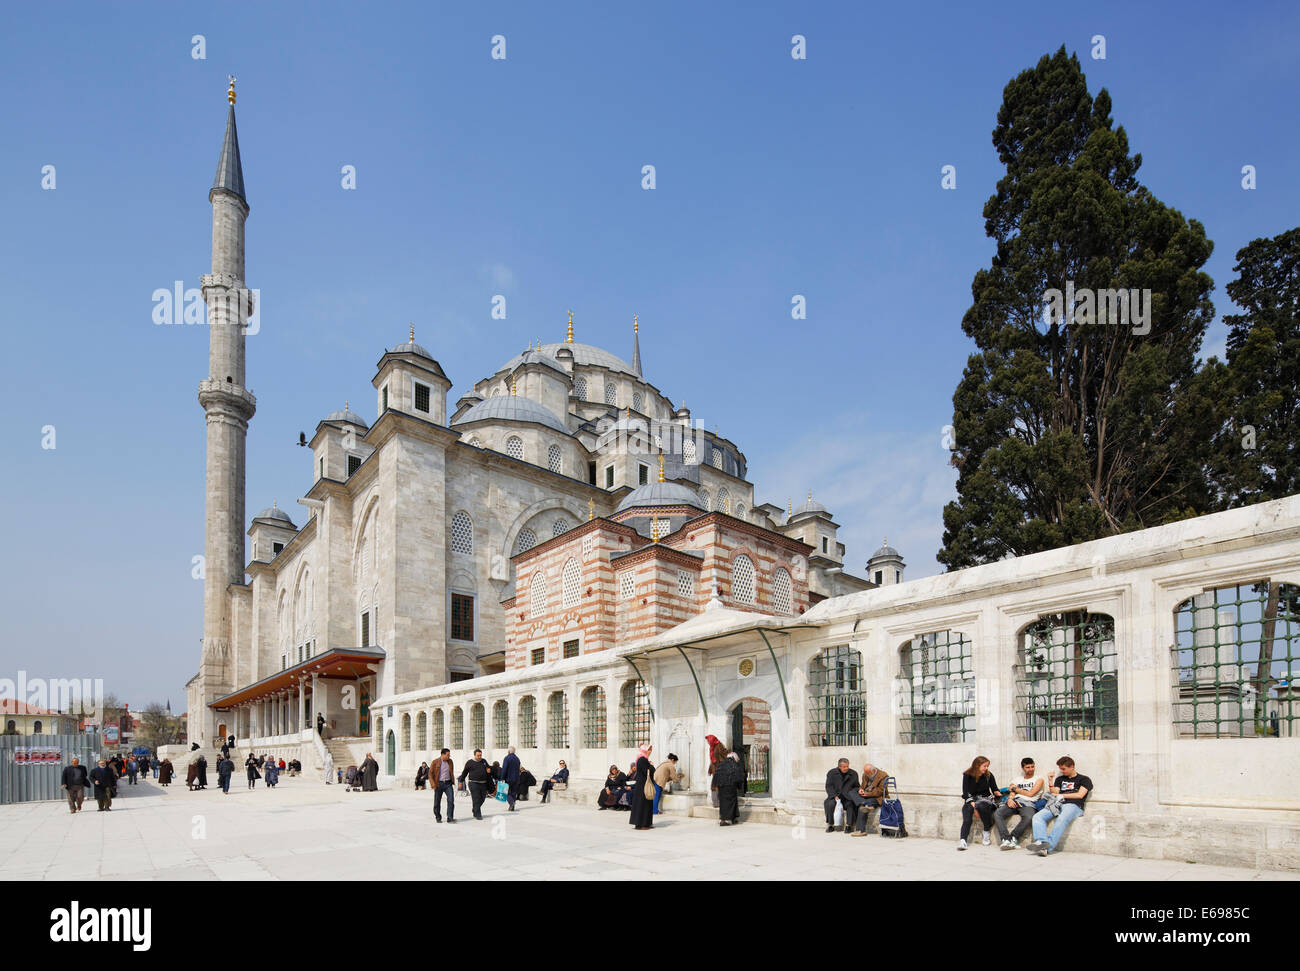 Fatih Mosque, Fatih Camii, Conqueror's Mosque, Fatih district, Istanbul, European Side, Turkey Stock Photo